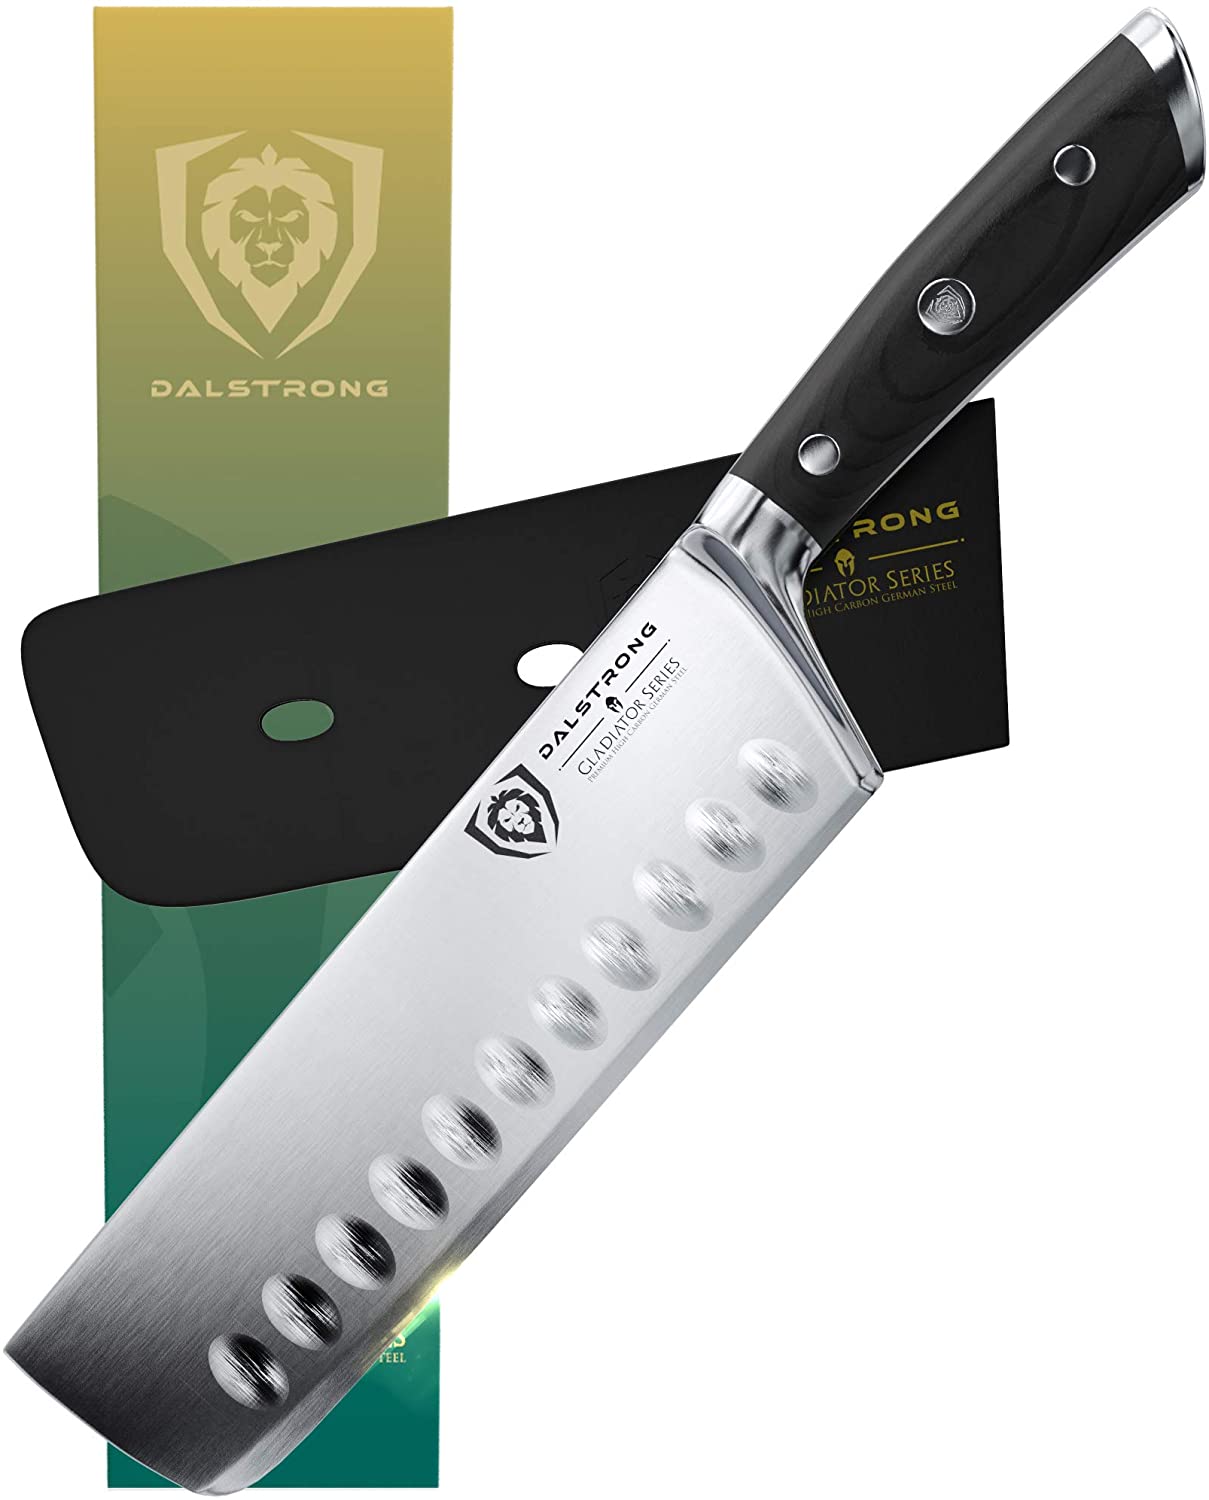 Mejor cuchillo de verduras japonés nakiri en general: DALSTRONG 7 Gladiator Series